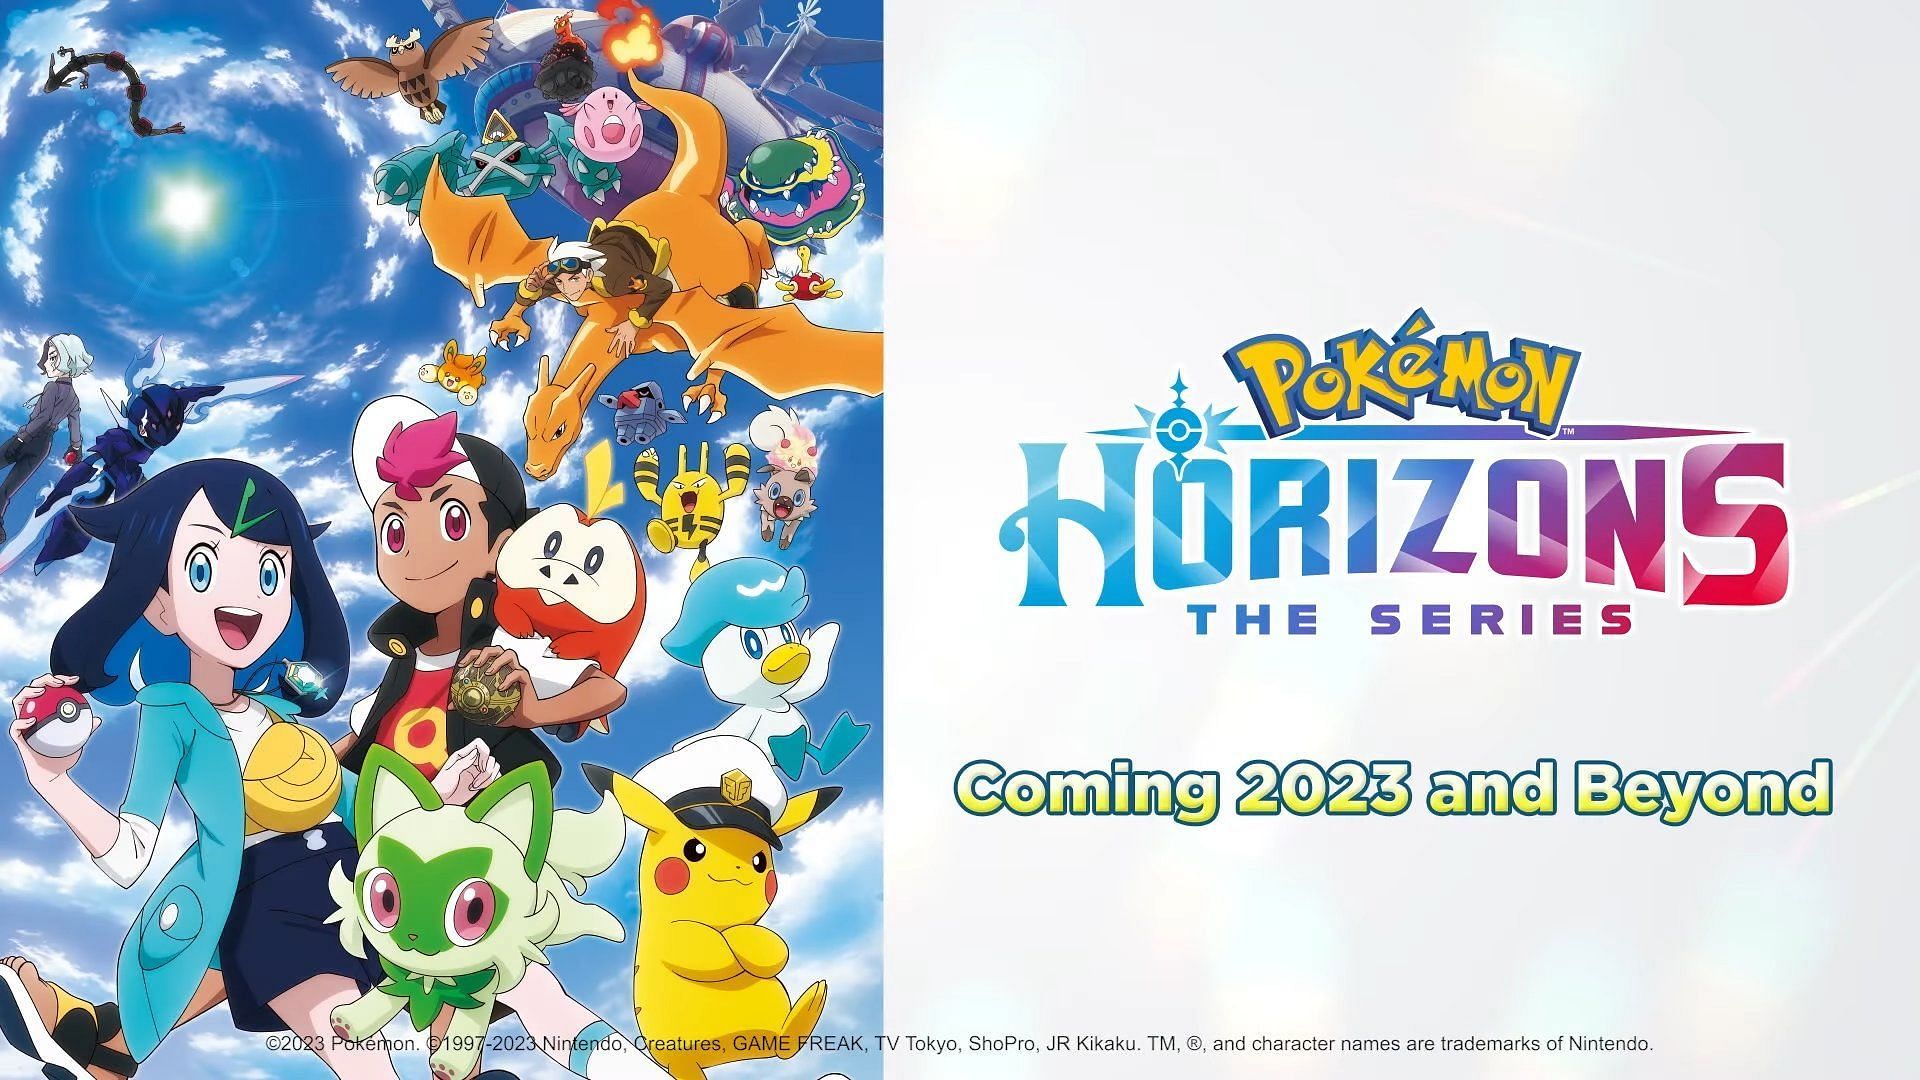 New Pokemon Teased in Pokemon Horizons Debut 